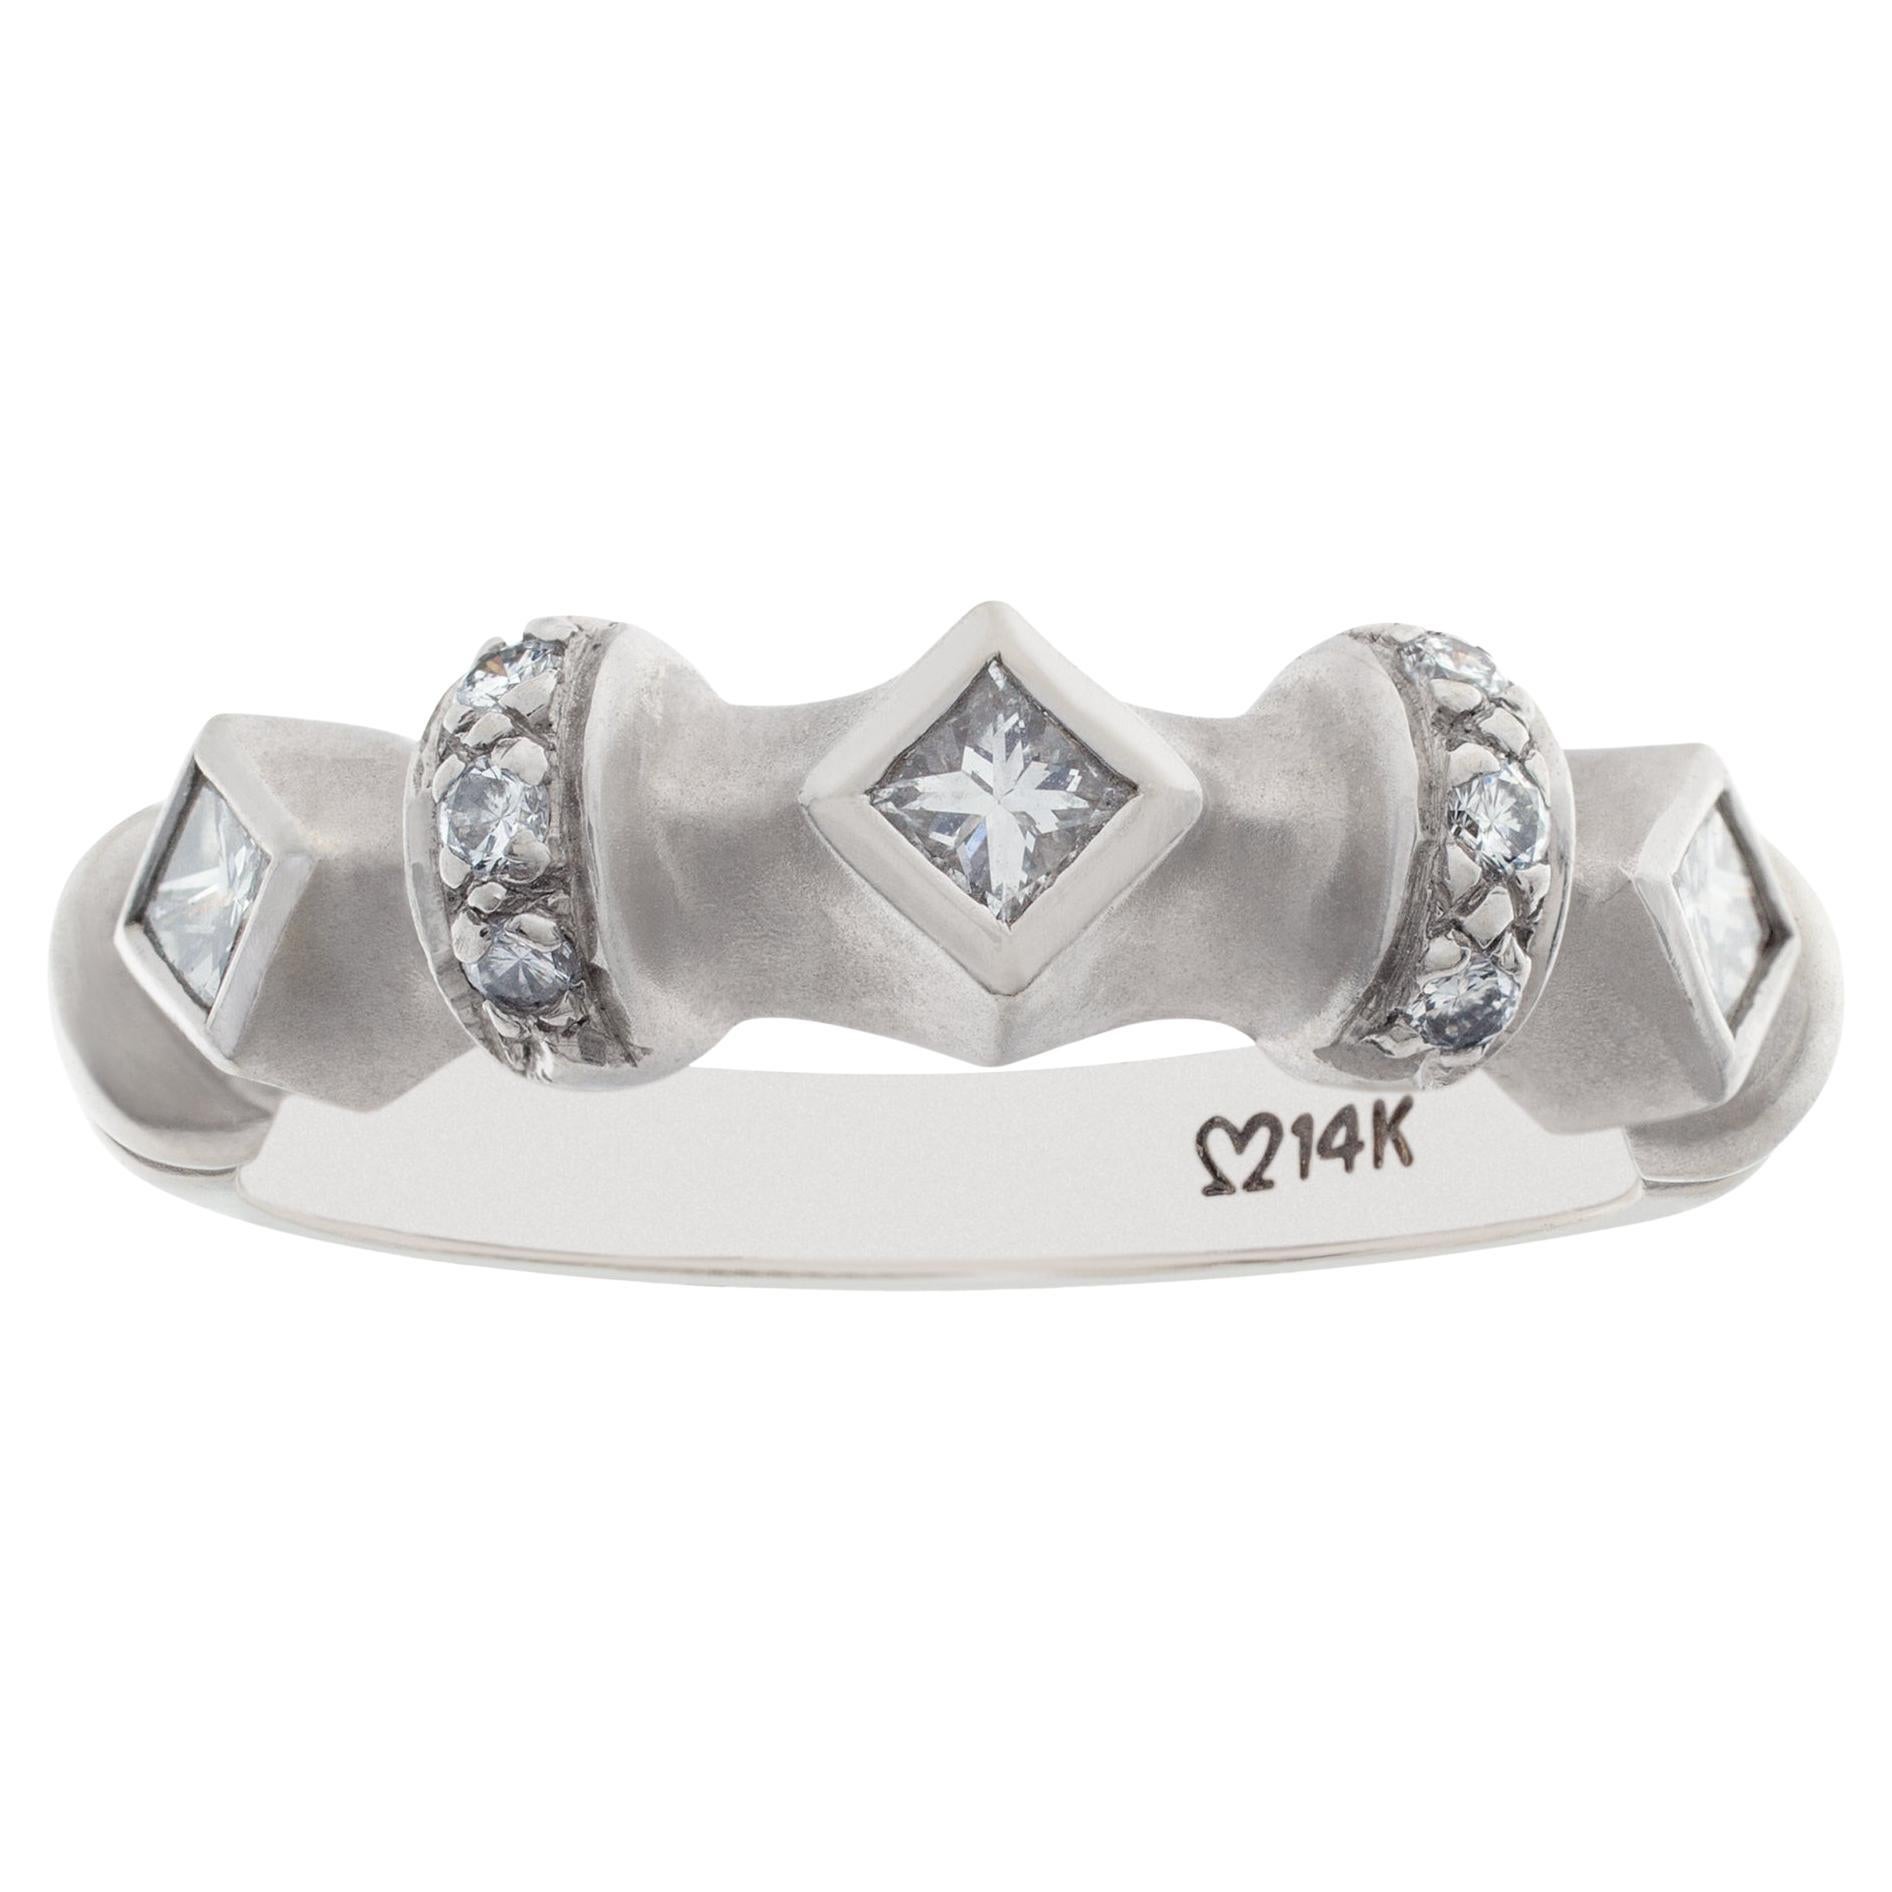 Geometric Diamond Ring Set in Matte Finish 14k White Gold. 0.50 Carats For Sale